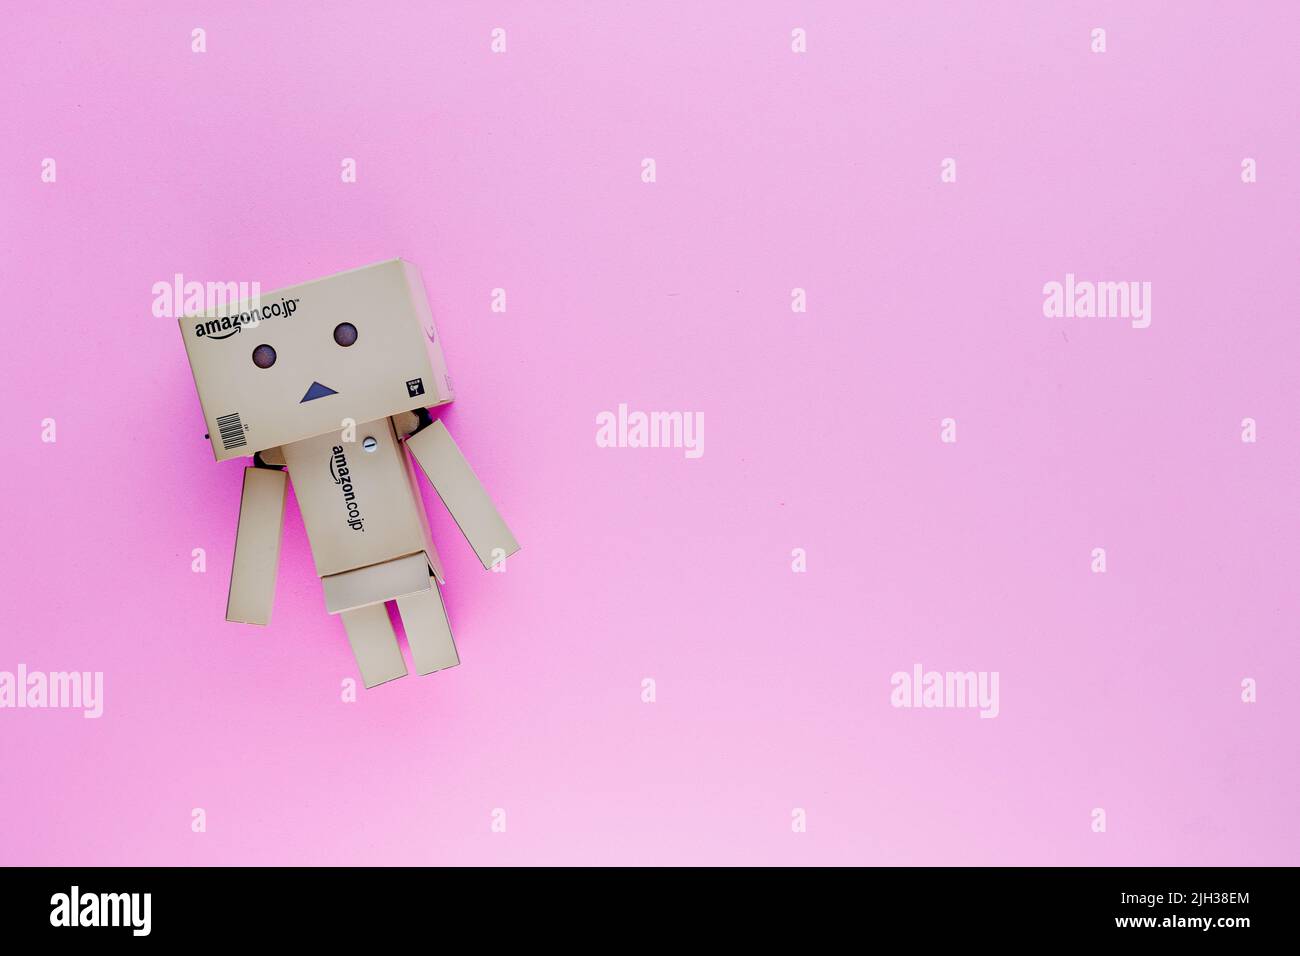 Danbo/Danboard fictional robot character flat lay Stock Photo